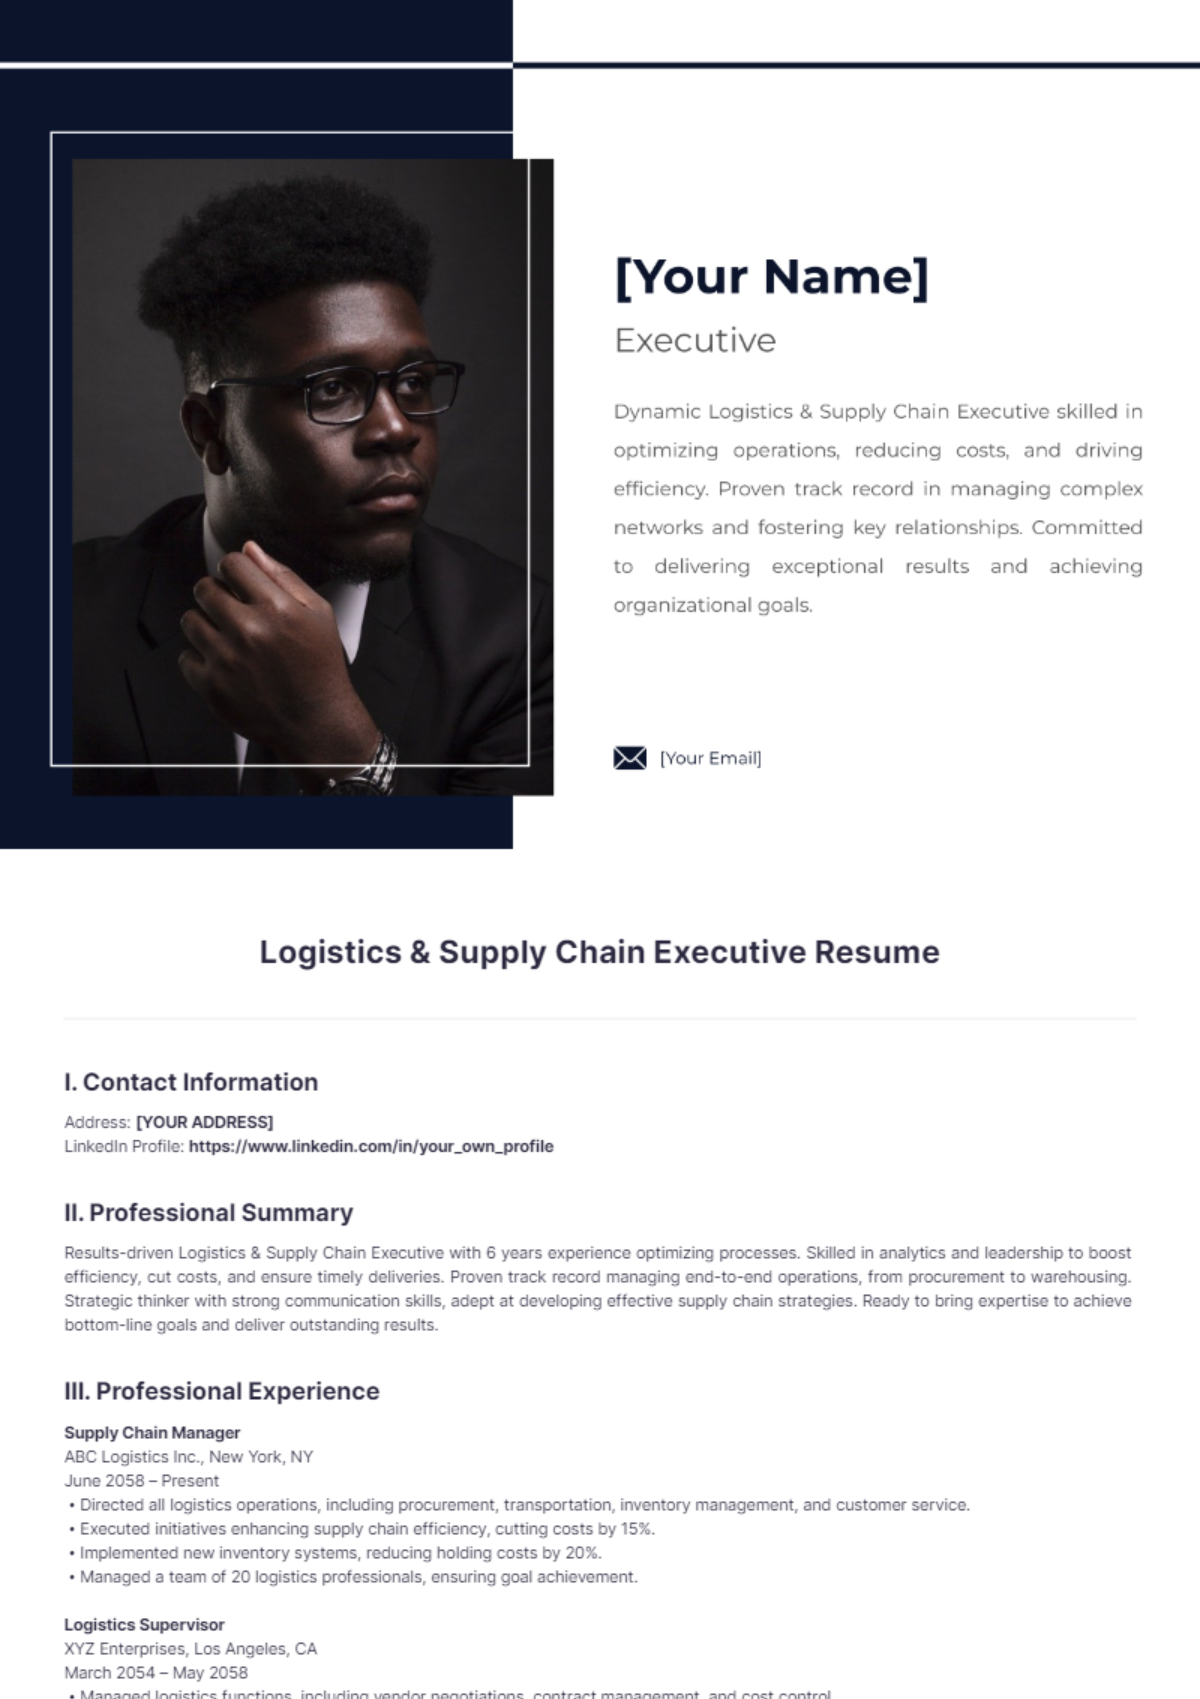 Free Logistics & Supply Chain Executive Resume